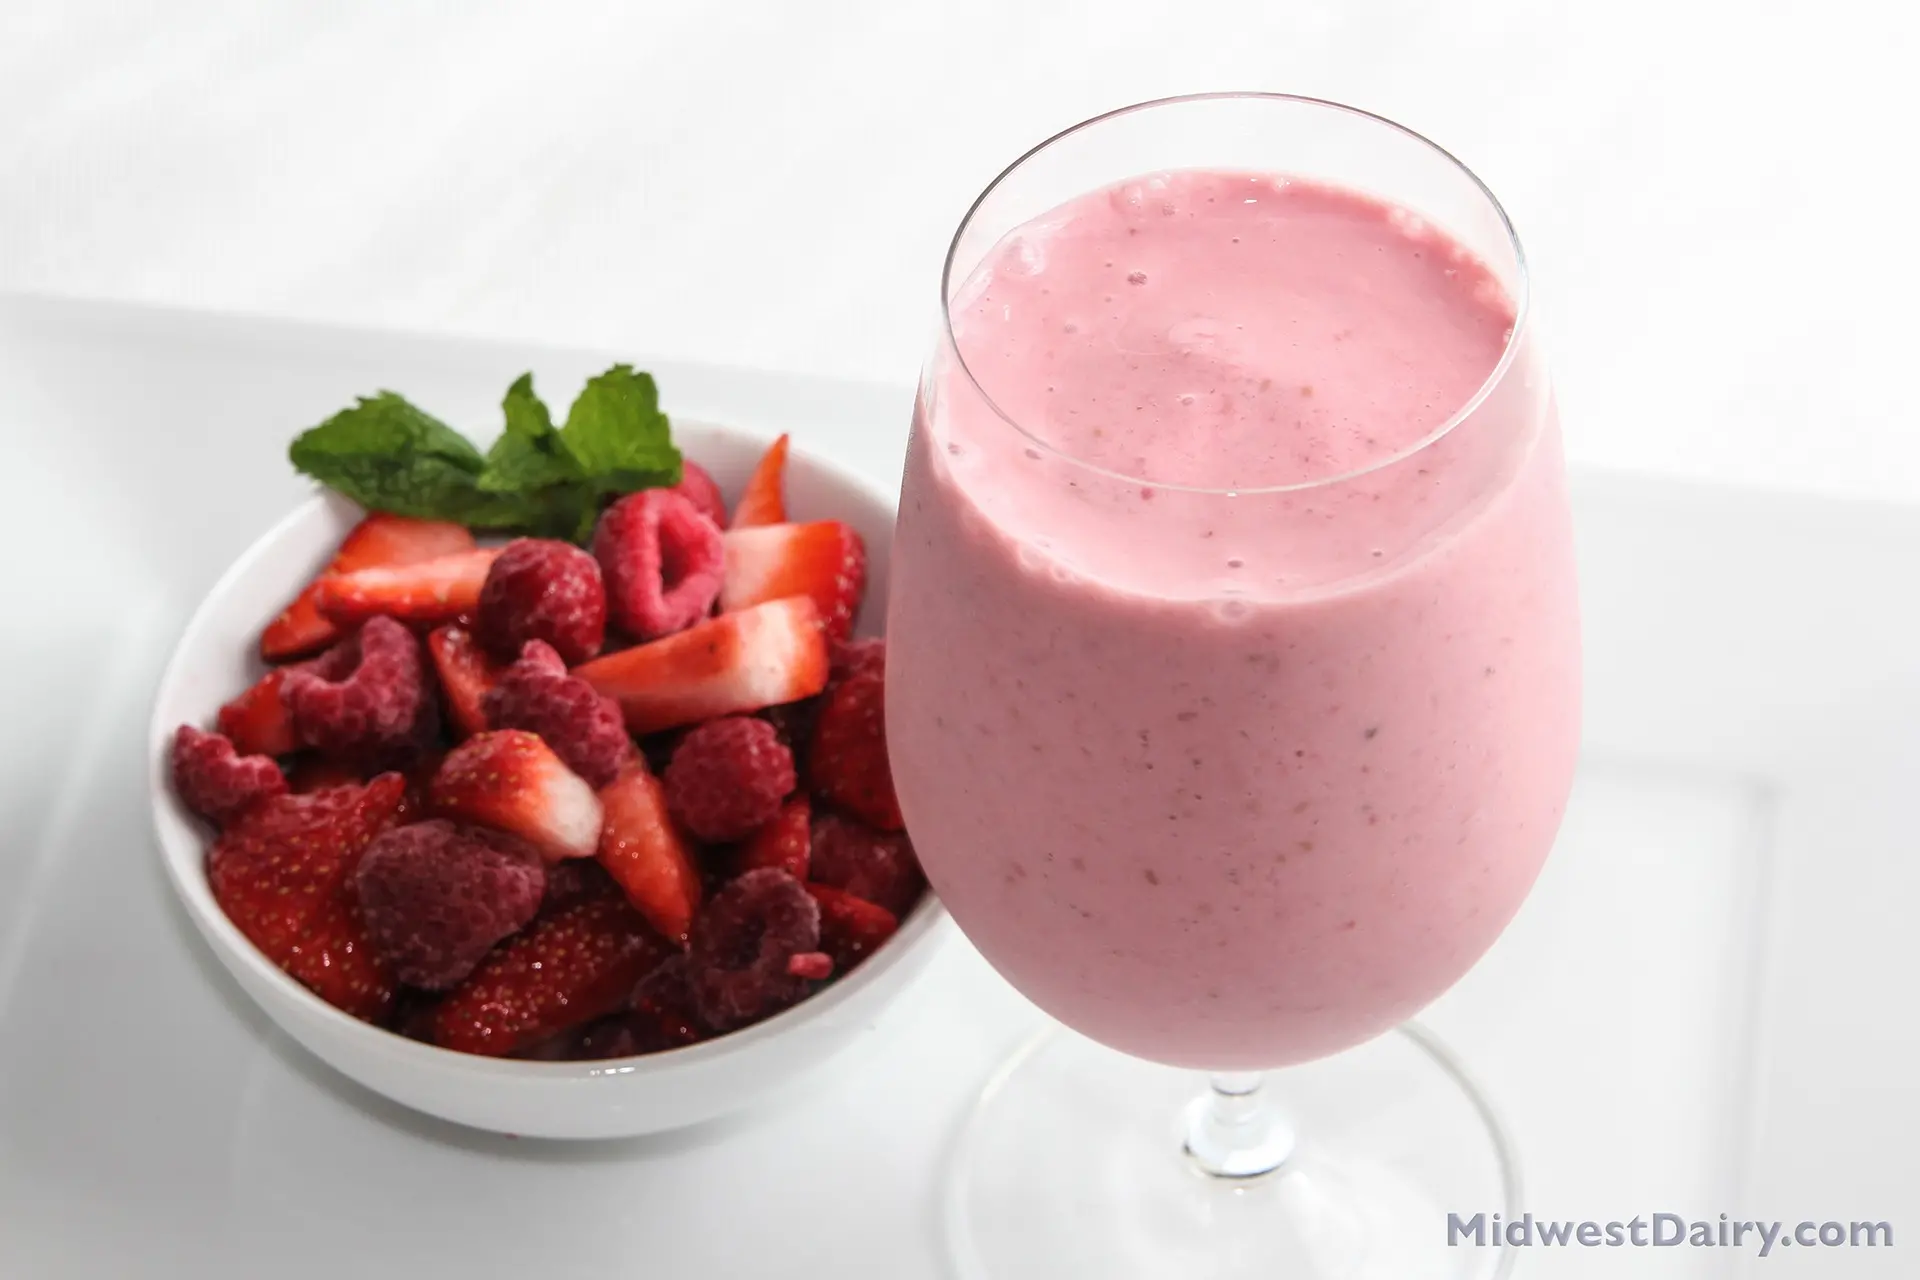 https://www.midwestdairy.com/wp-content/uploads/Raspberry-Strawberry-Yogurt-Smoothie-1-jpg.webp